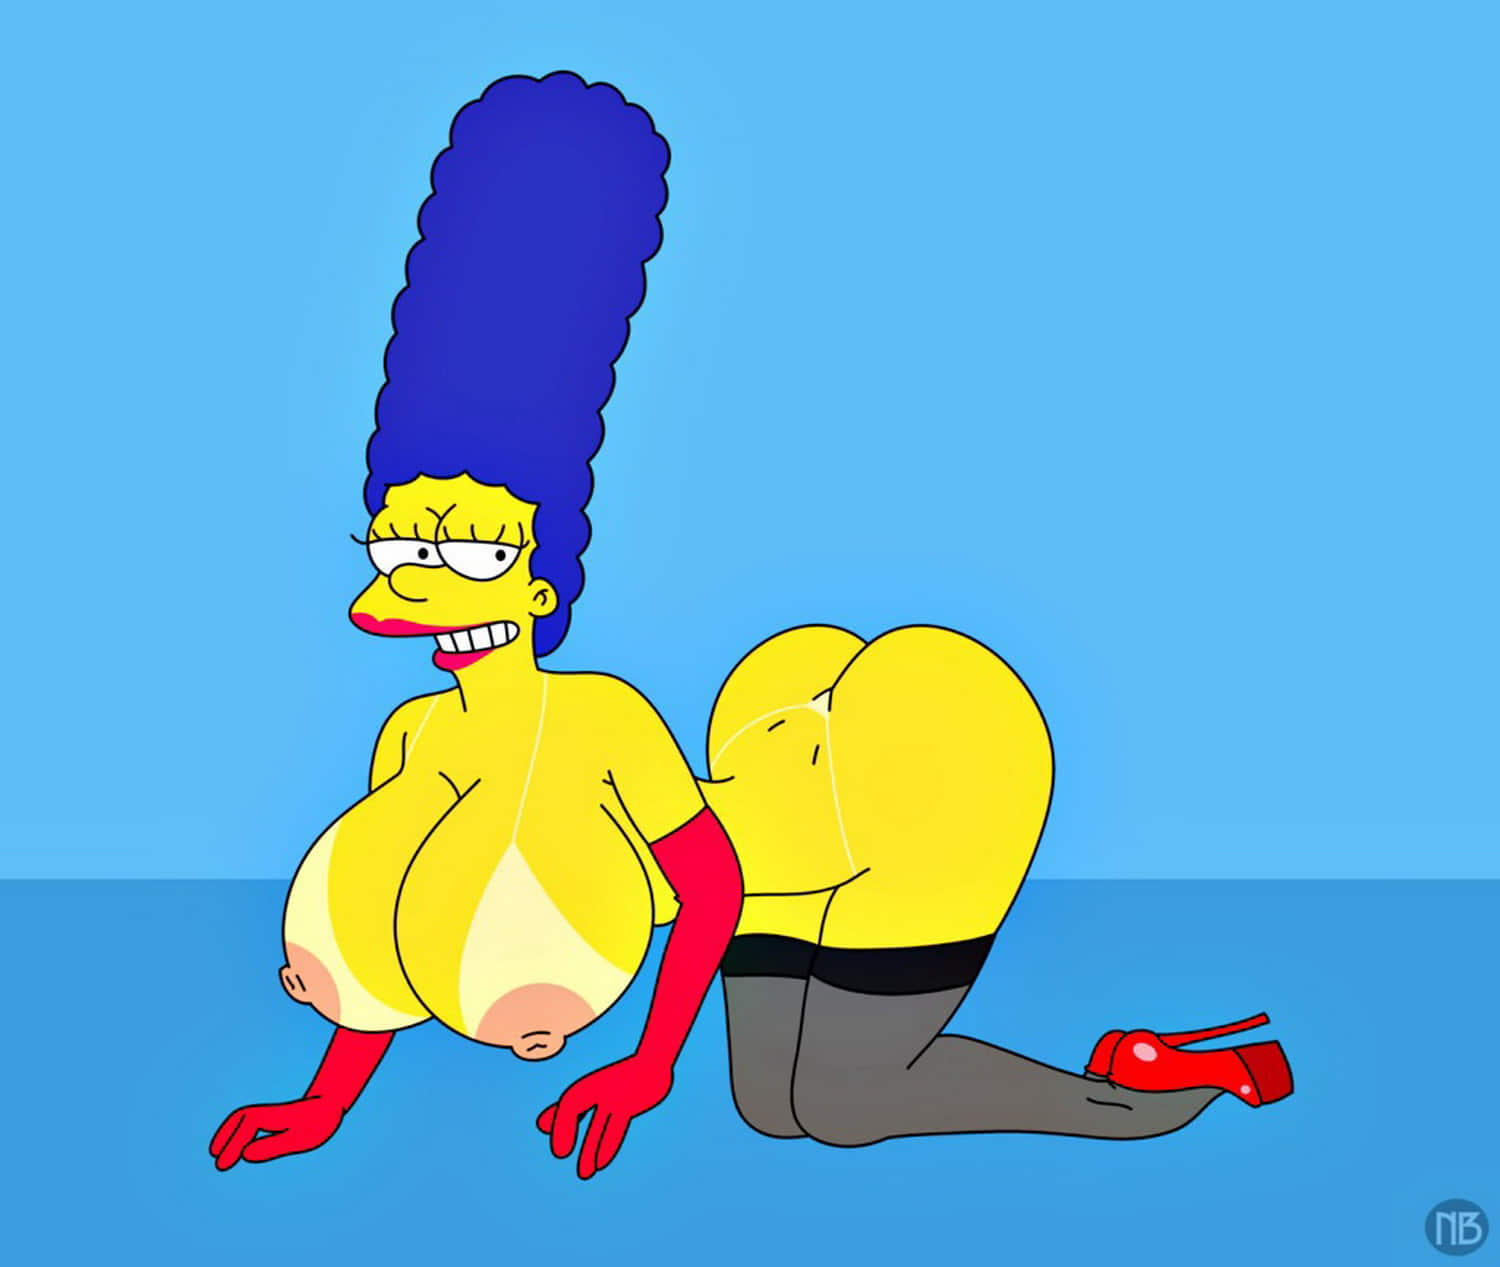 Marge simpsons big tits